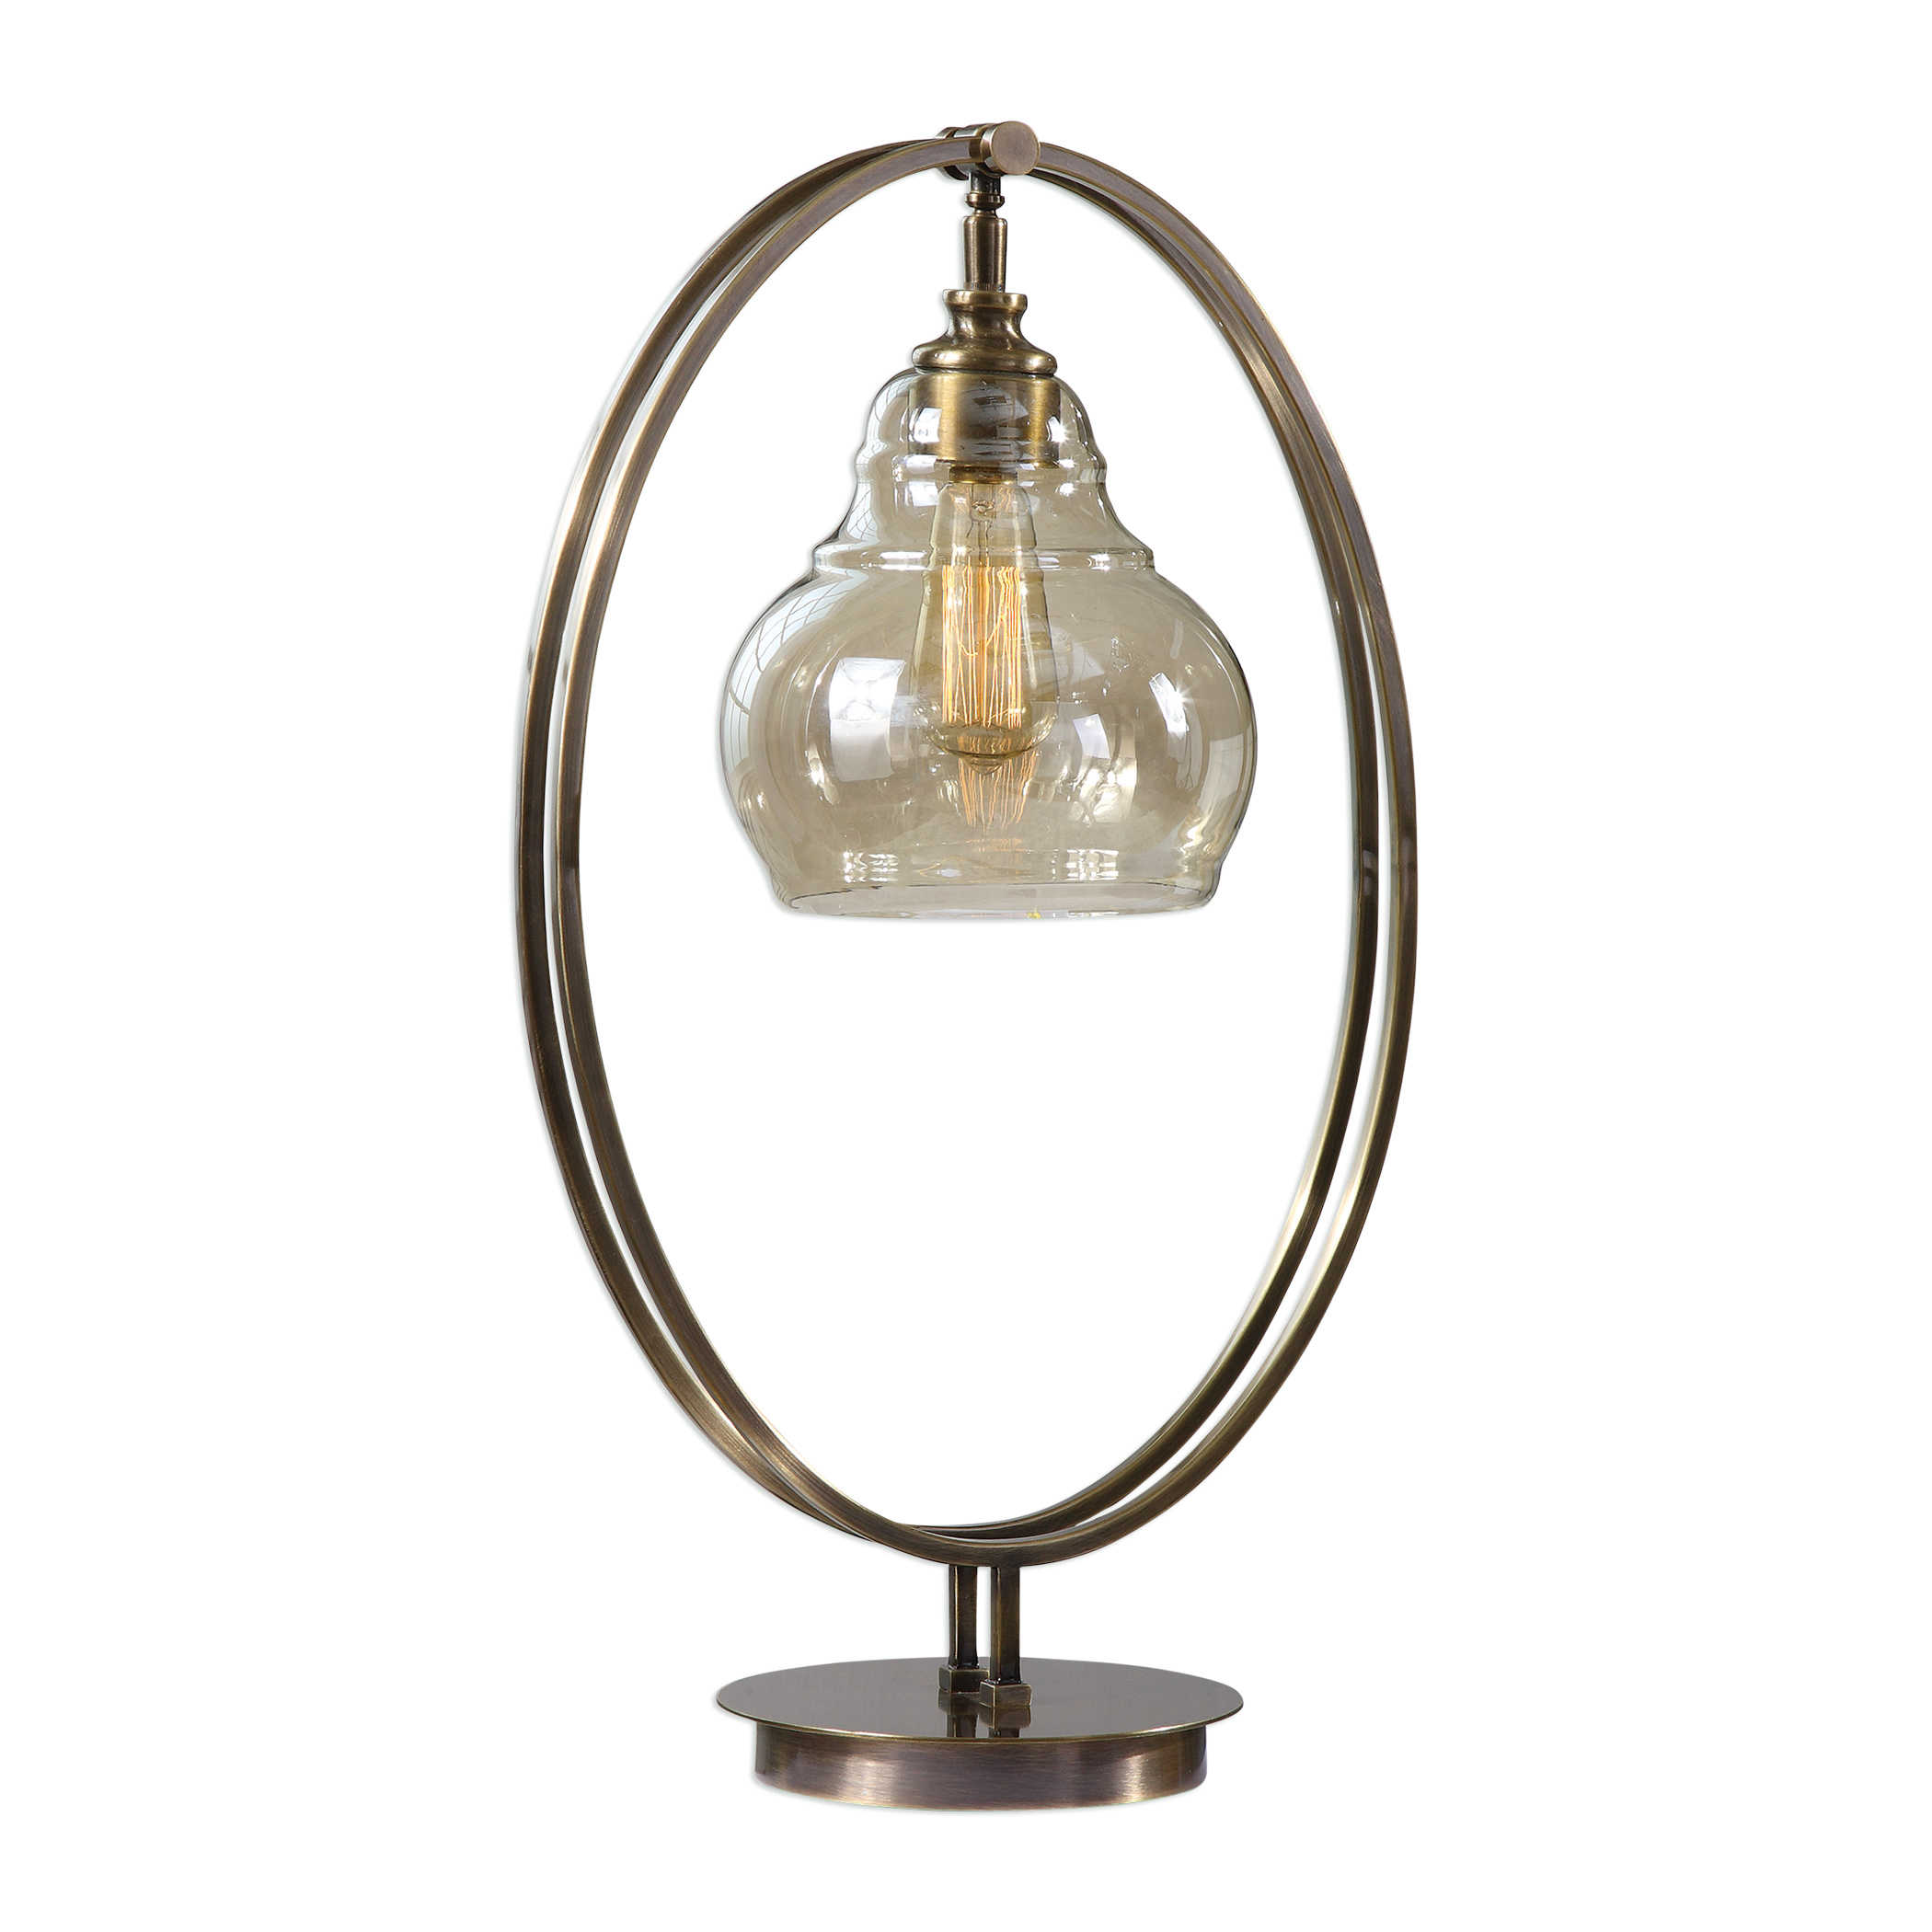 Лампа ELLIPTICAL ACCENT LAMP 29550-1 Uttermost США